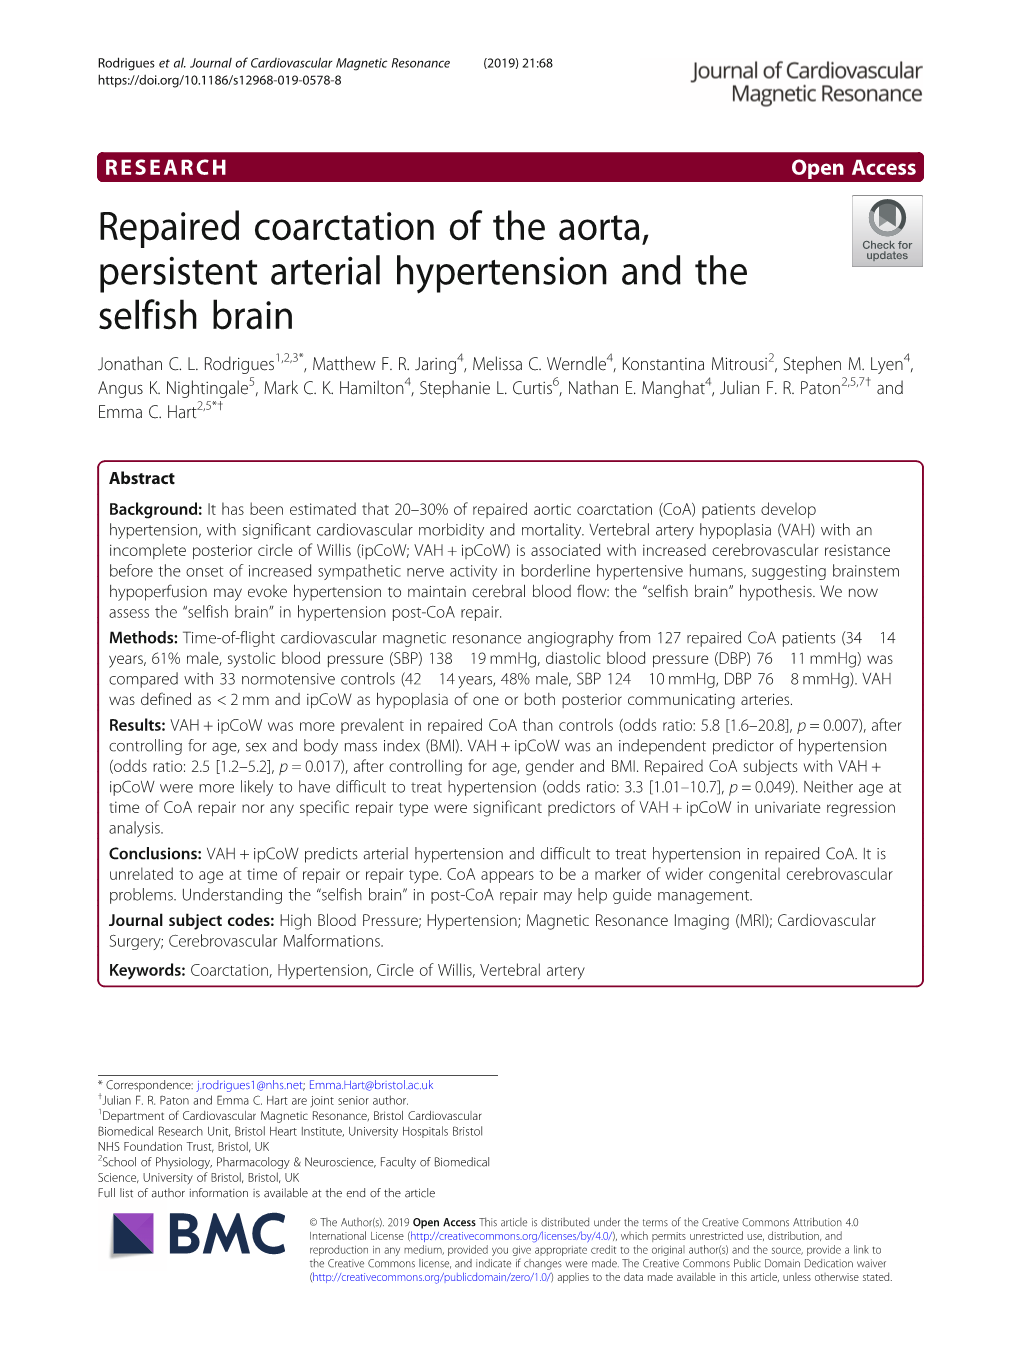 Repaired Coarctation of the Aorta, Persistent Arterial Hypertension and the Selfish Brain Jonathan C